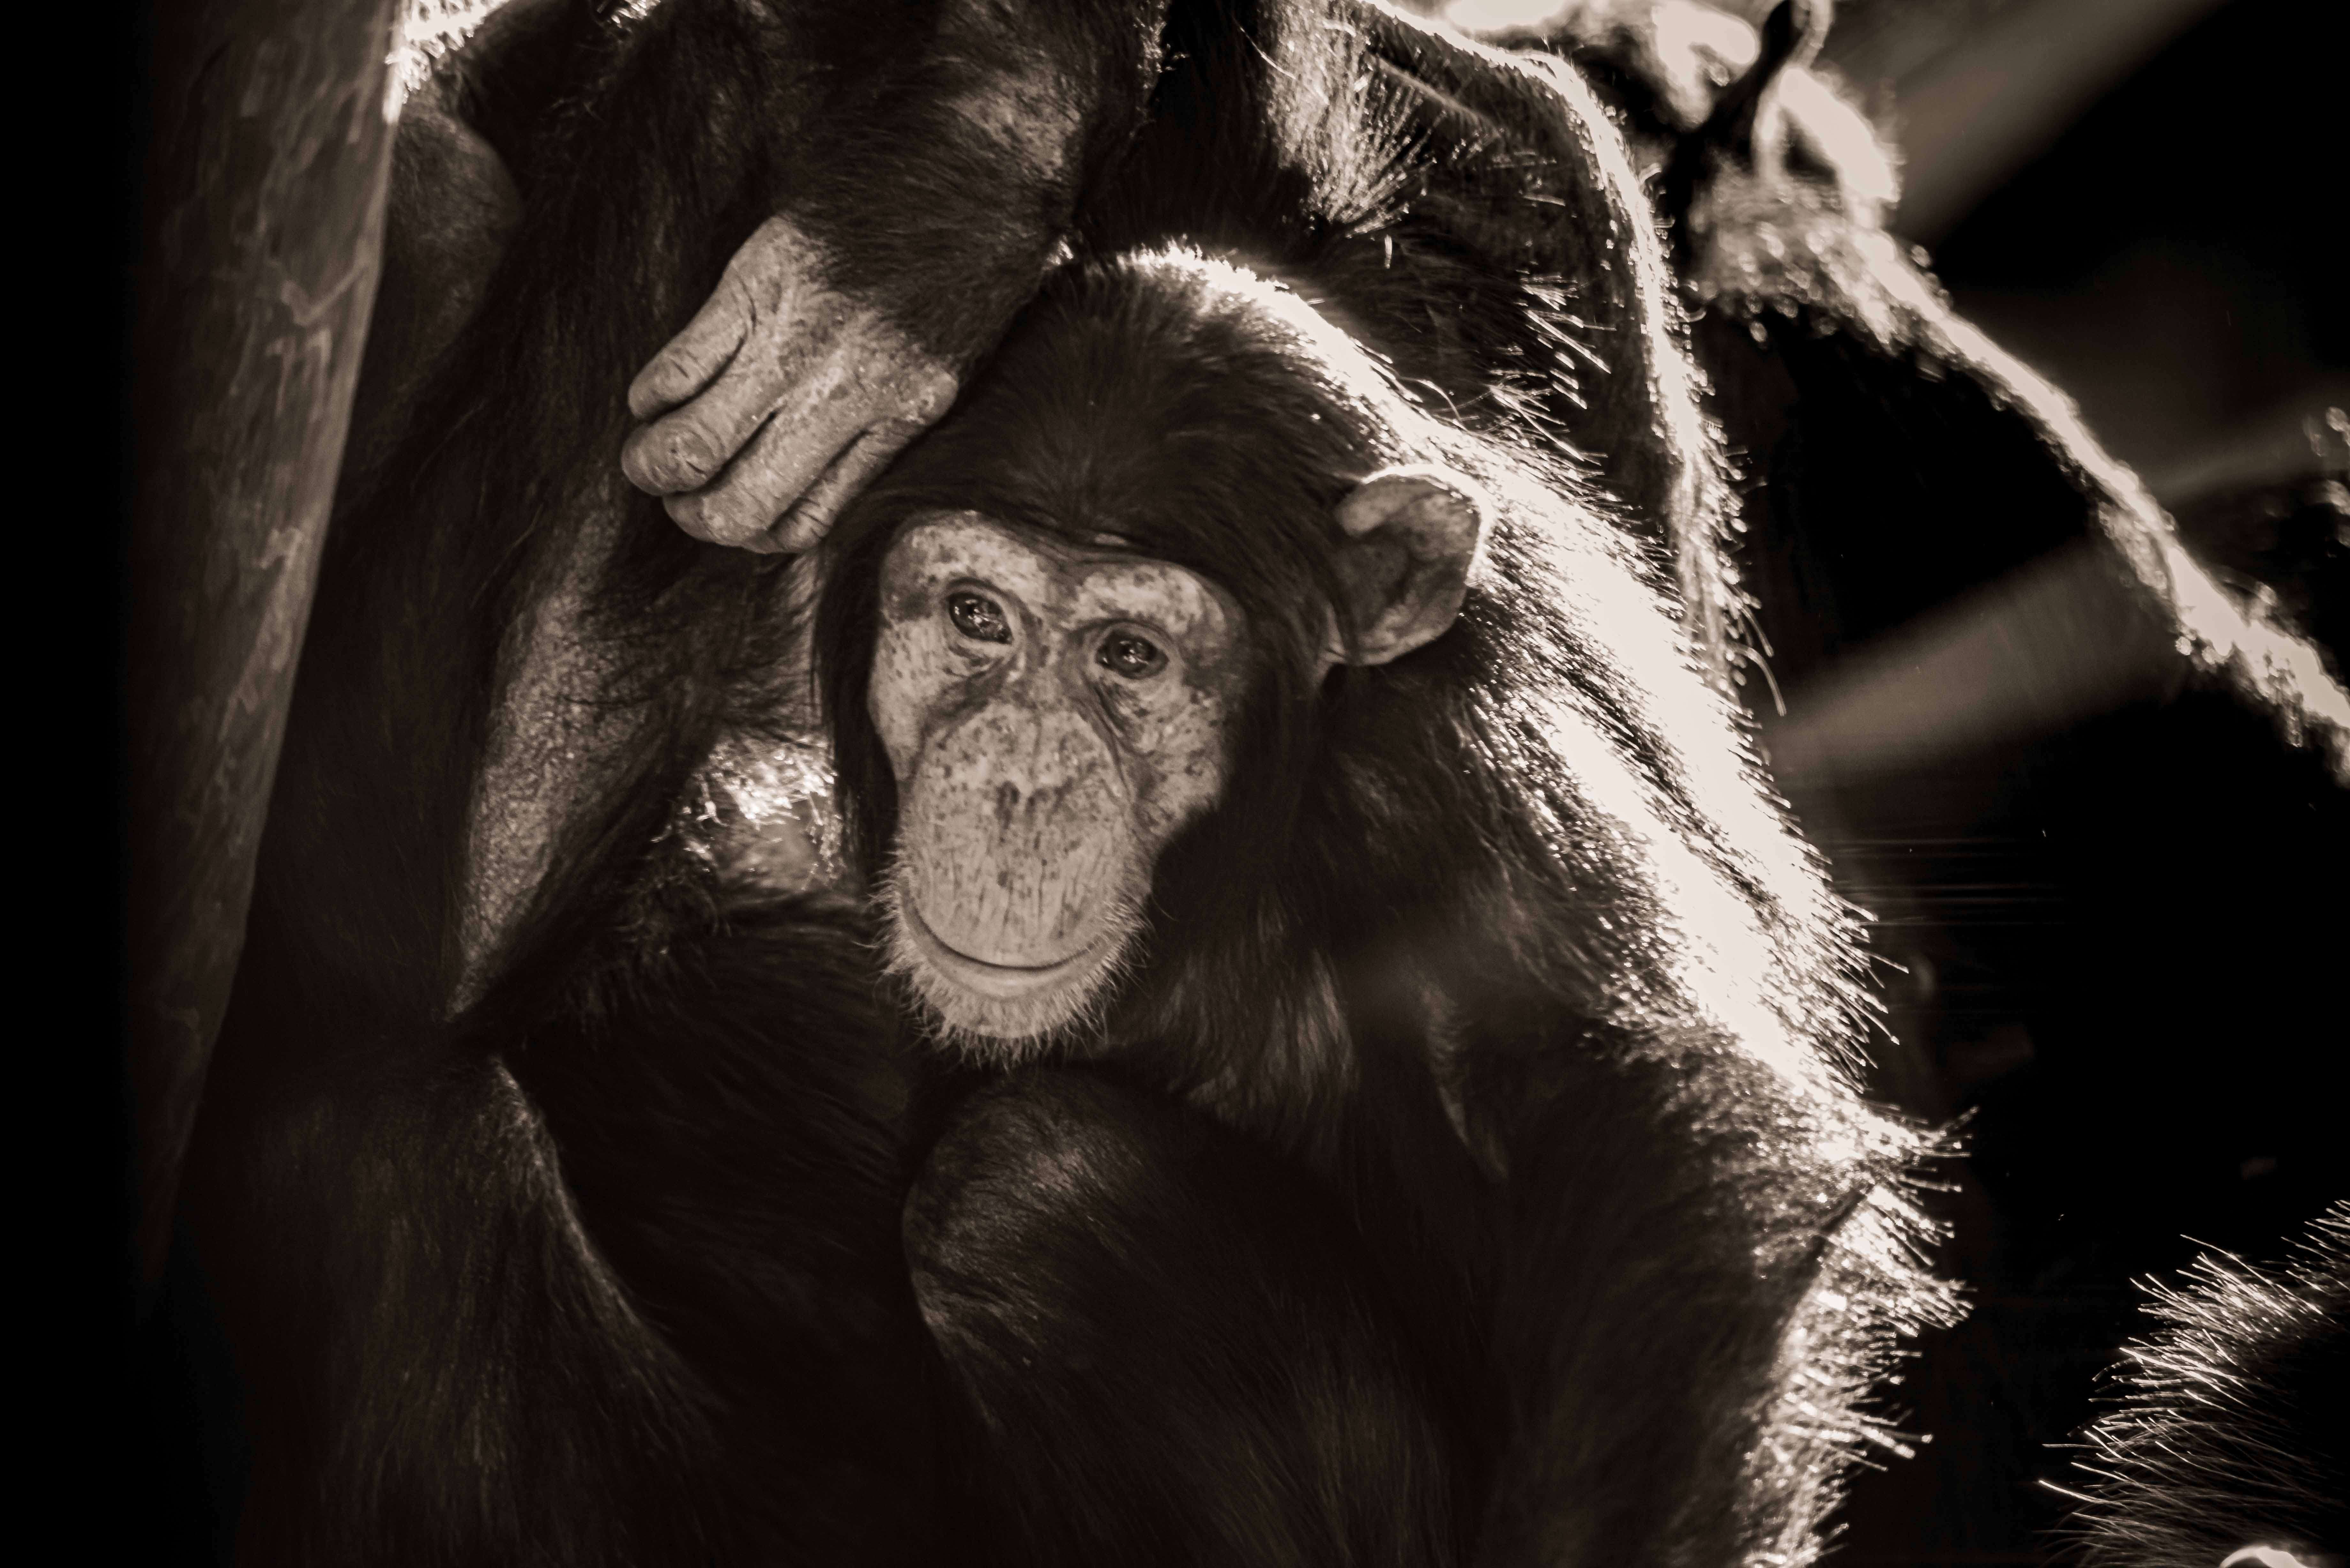 SEMD213 - DSC_7552 Sepia - 
Chimpanzee, Taronga Zoo,  Sydney, NSW, Australia.
1st July 2020 - 2.05pm
Camera - Nikon D800 
F5.6 - ISO 800 - 1/60 second - Focal Length 300mm : Wildlife - Sepia : Stephen E-Moran - Fine Art Photography